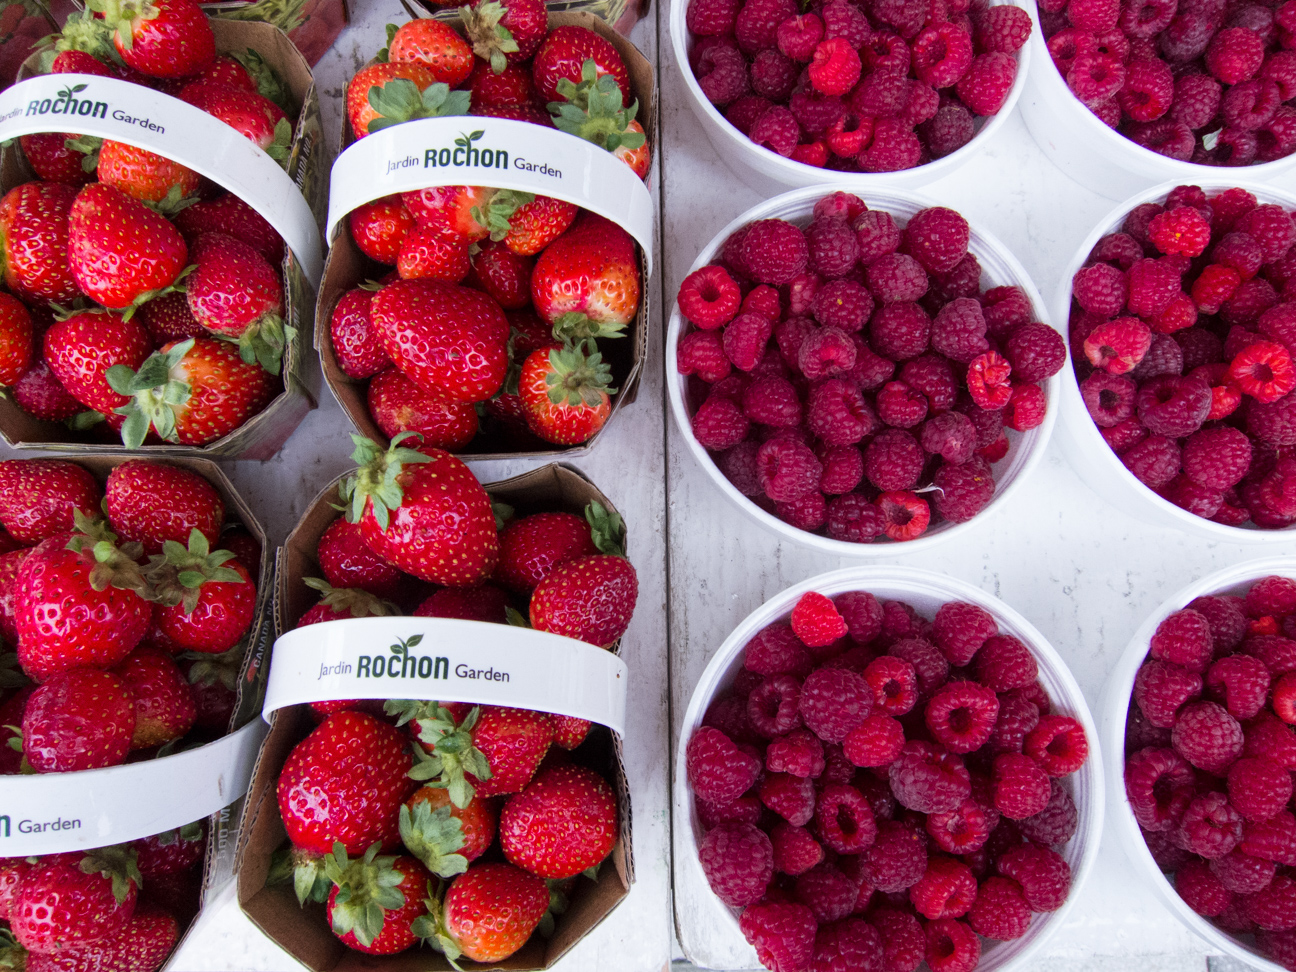 strawberries and raspberries at Ottawa Farmer's Market